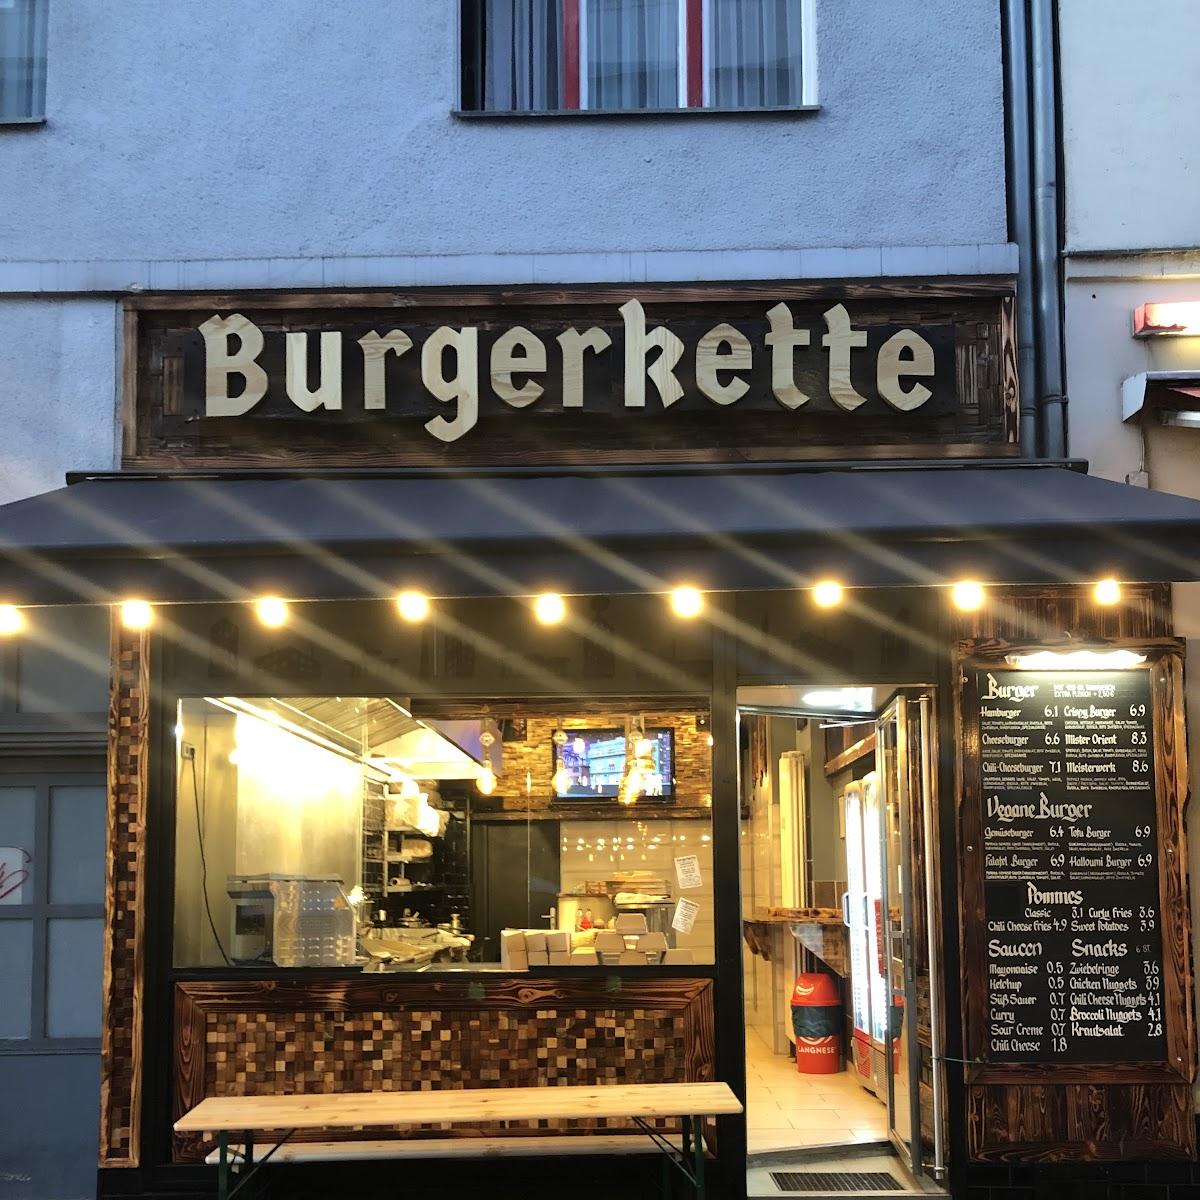 Restaurant "Burgerkette" in Berlin